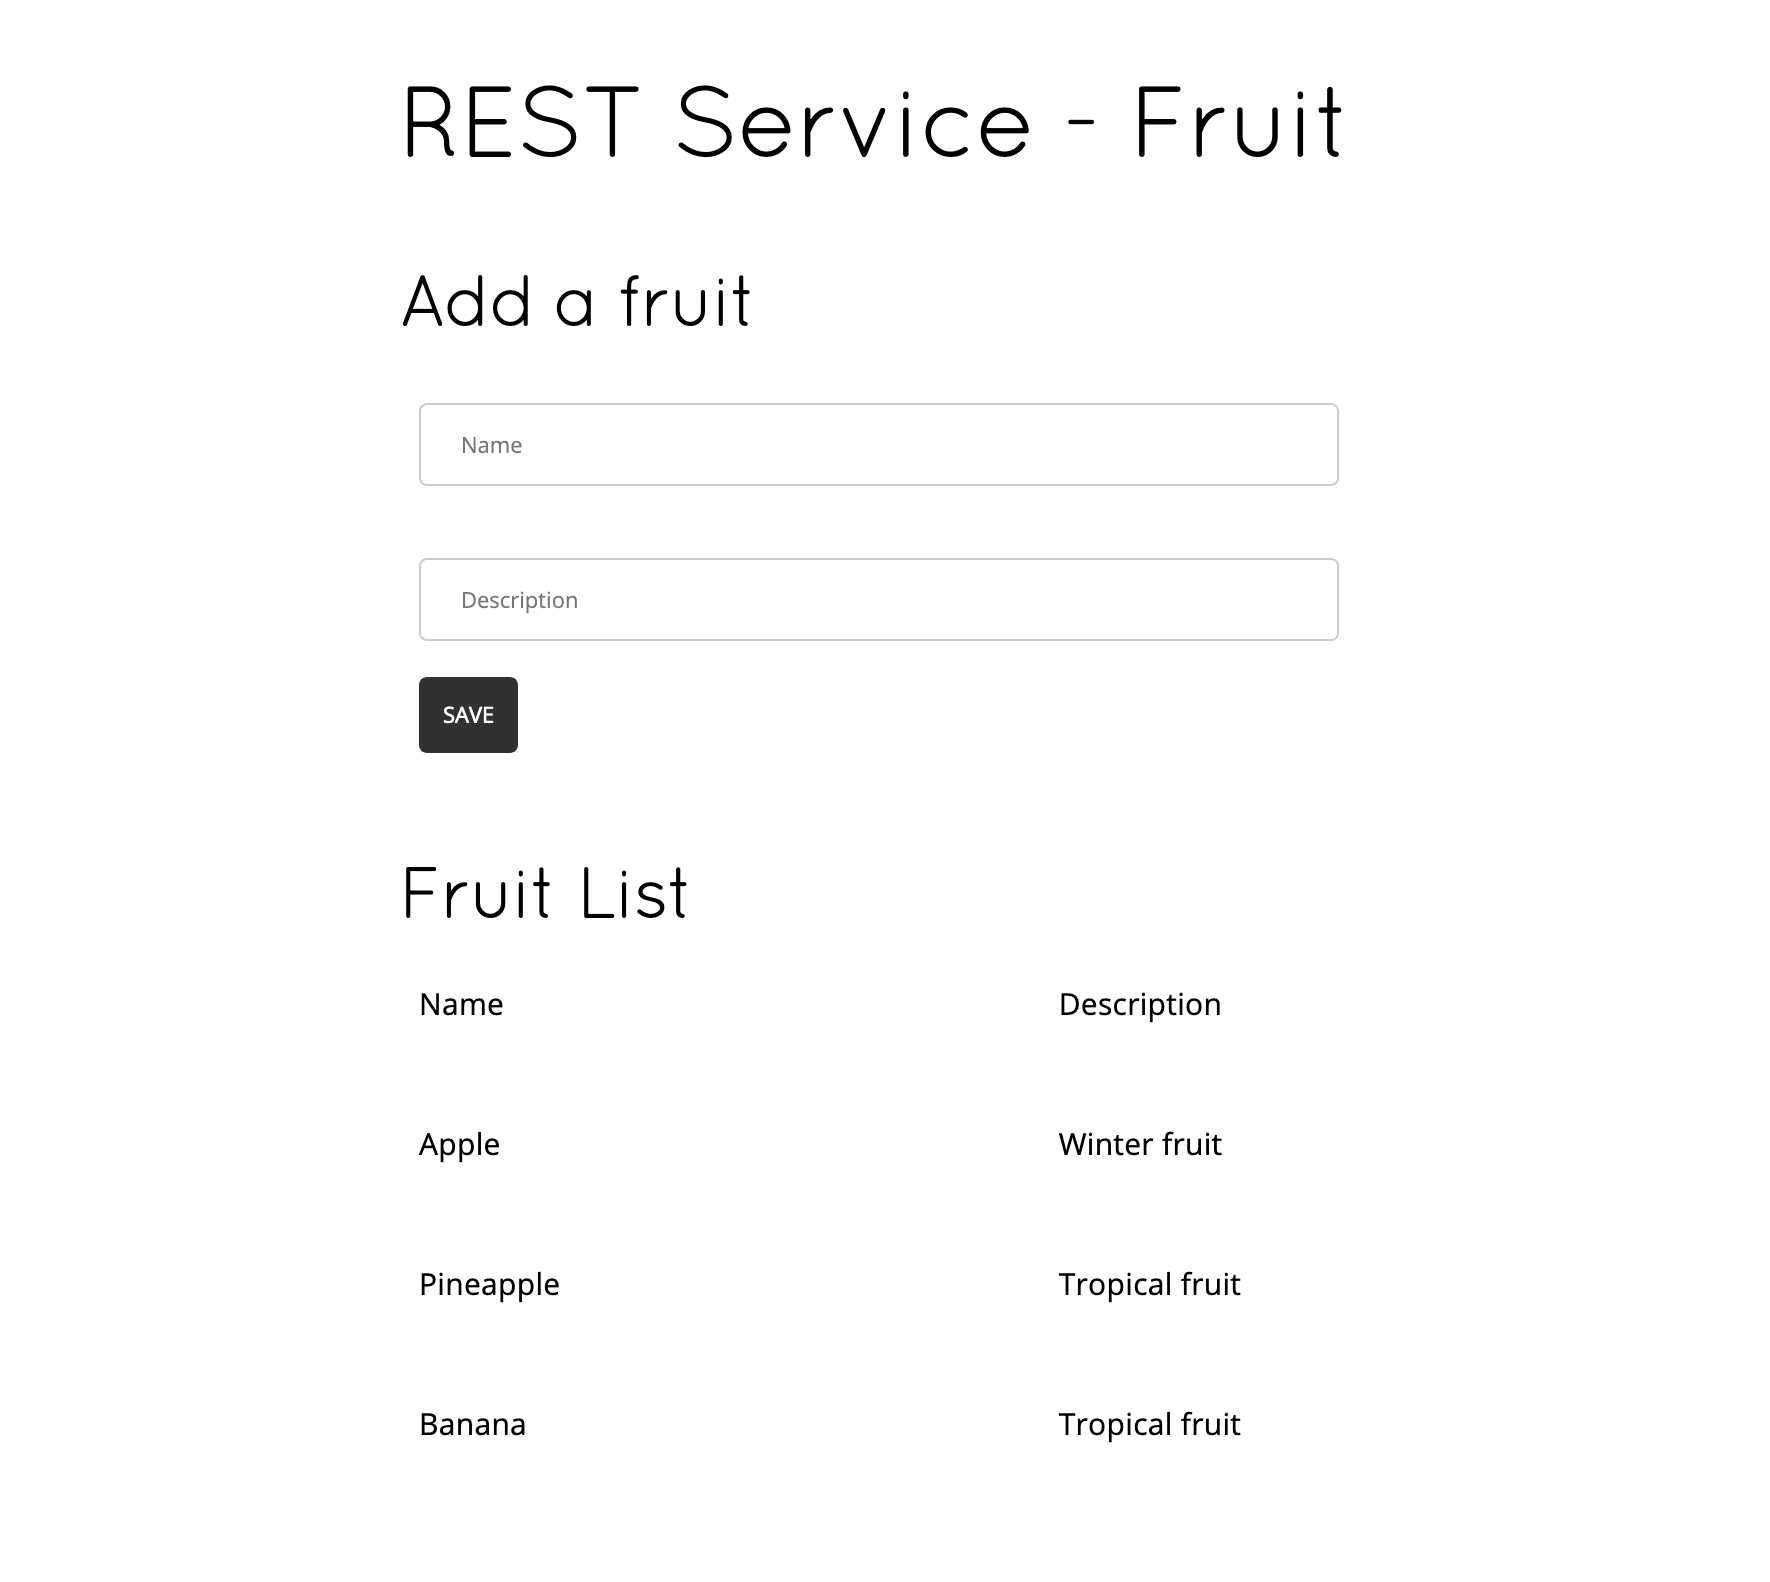 Fruit List